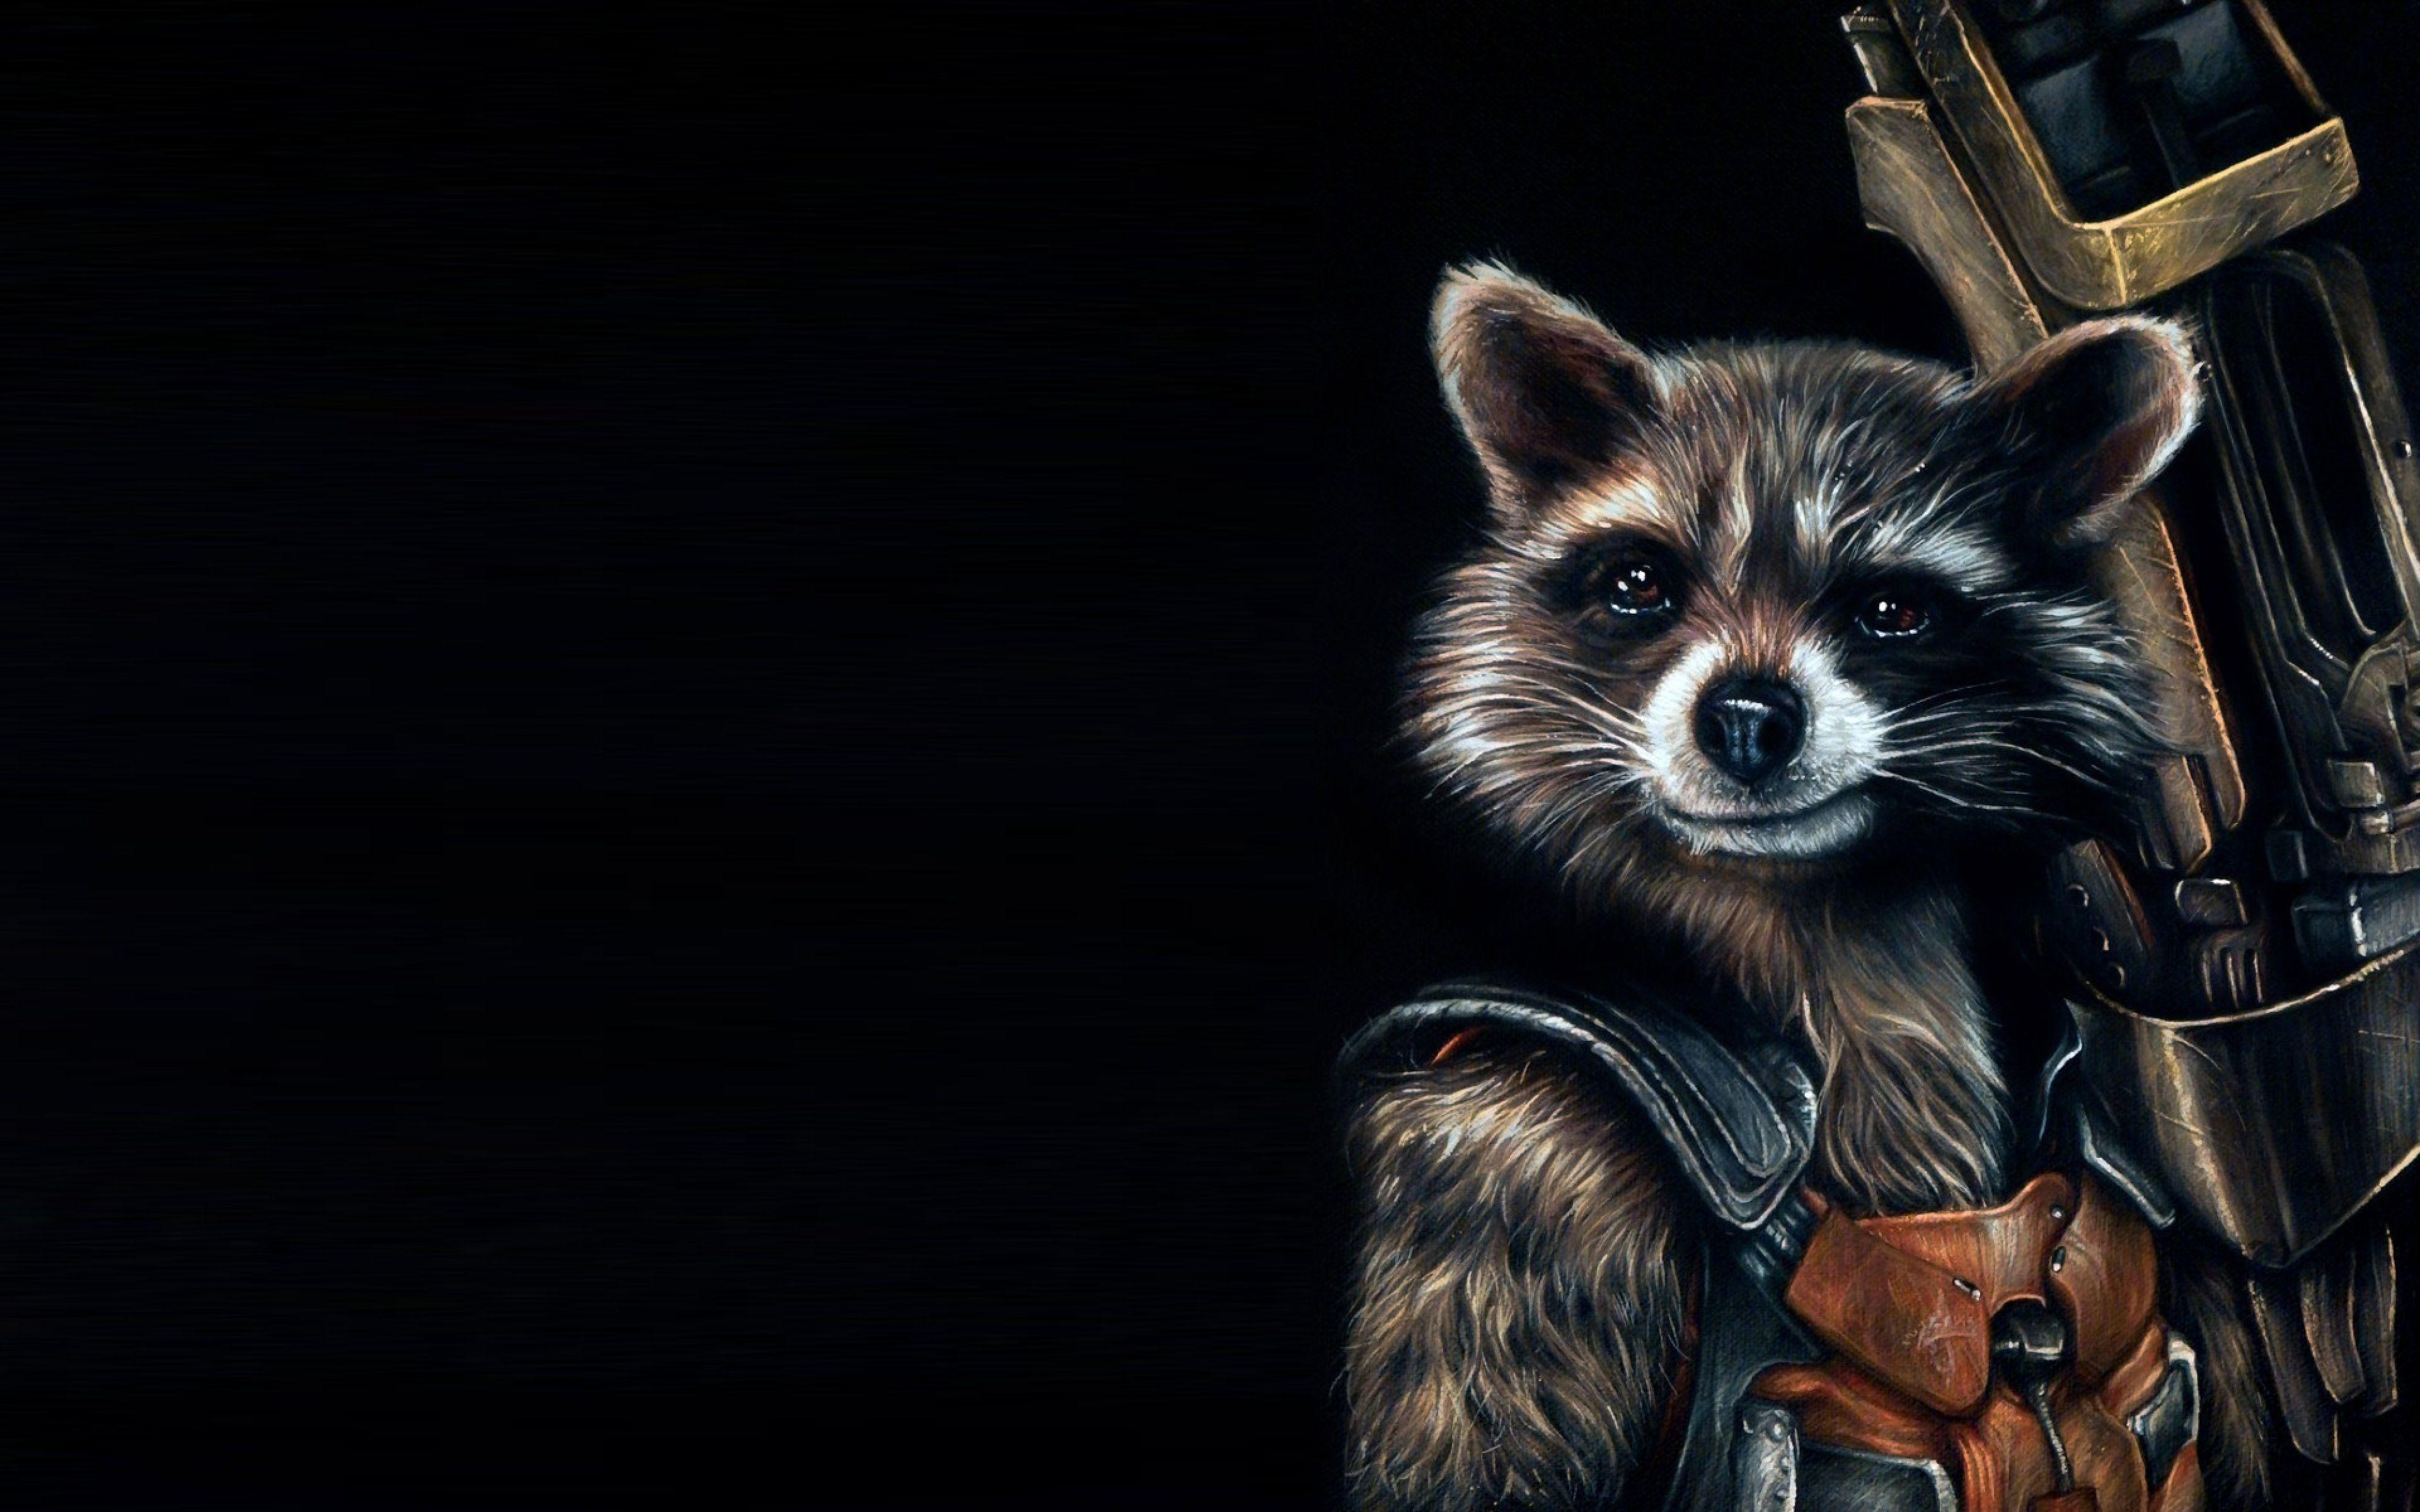 Avengers Endgame Rocket Raccoon Poster Art Wallpapers